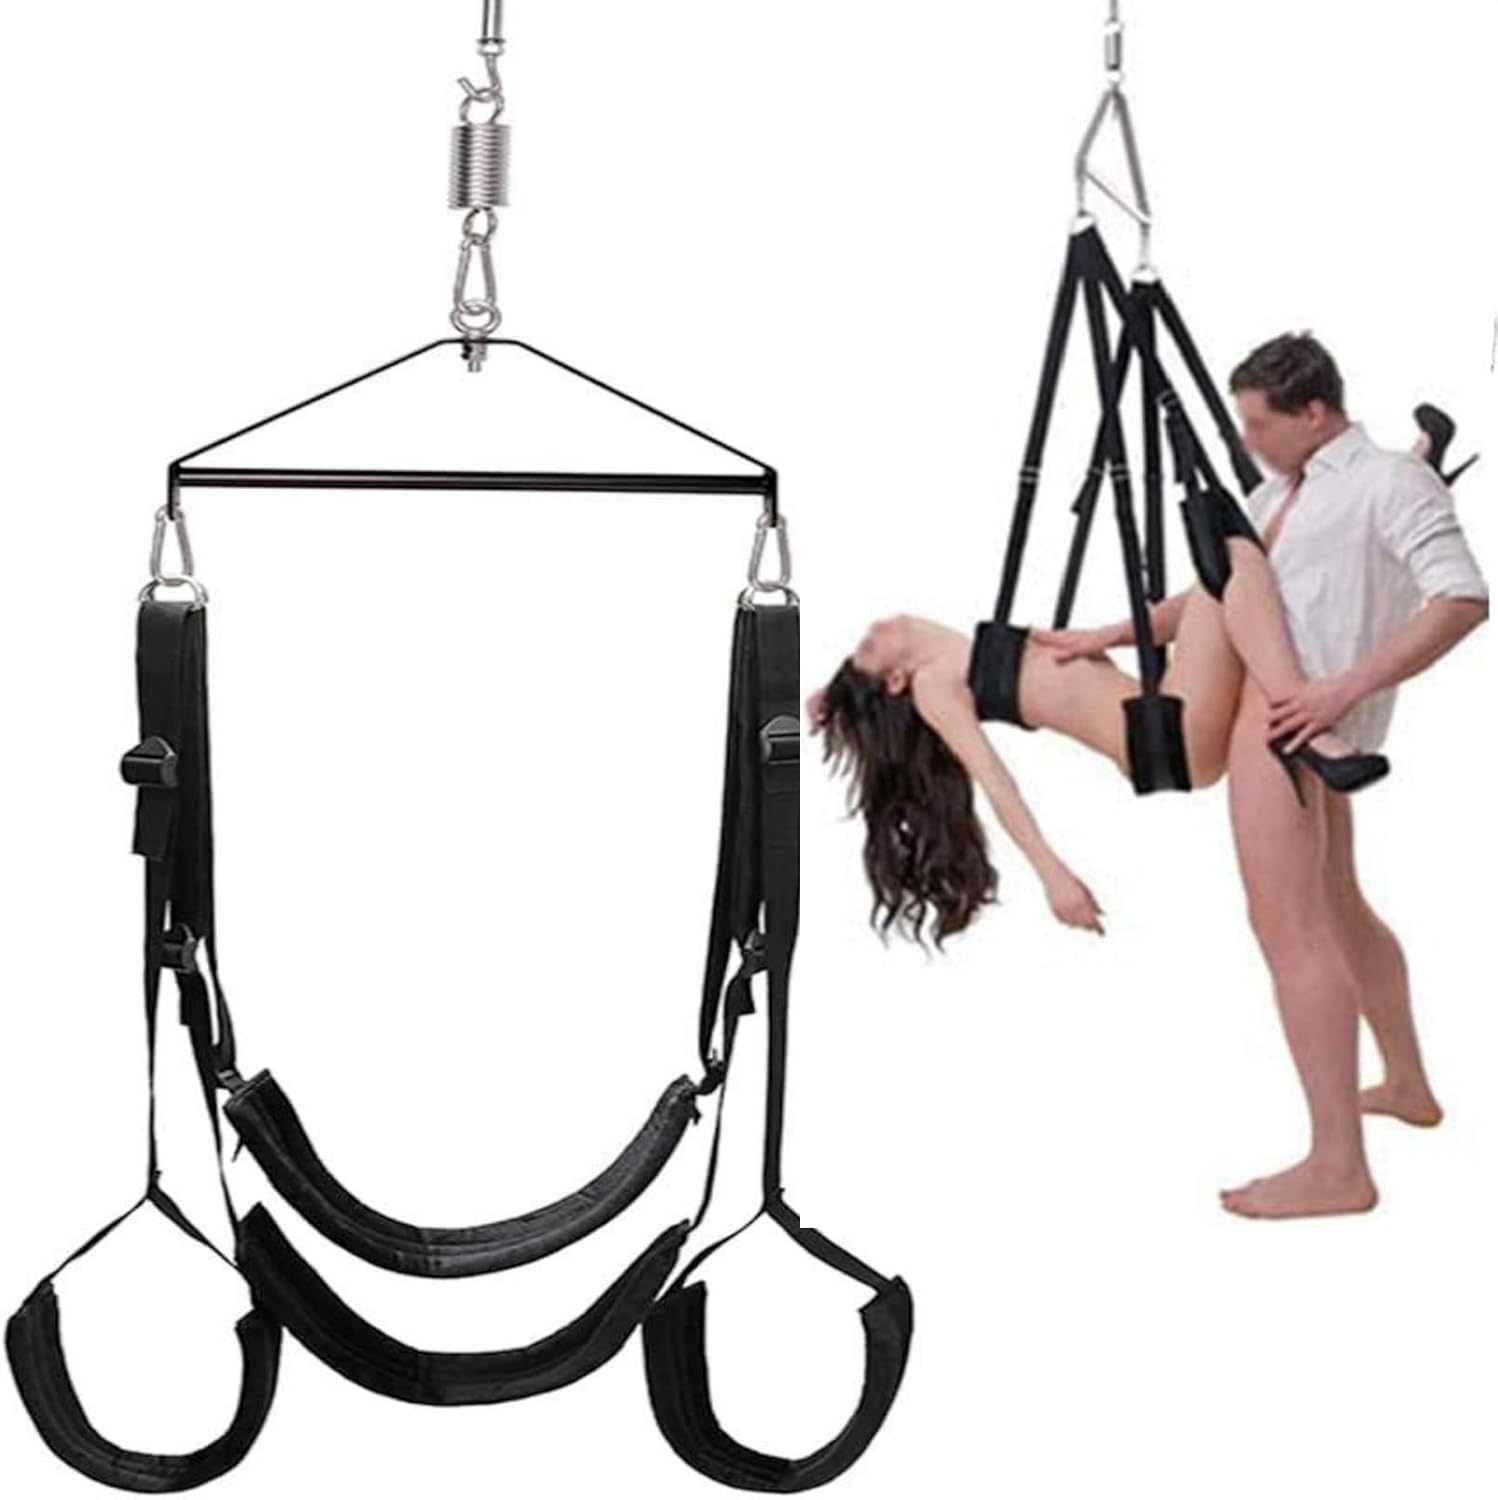 amanda elgin recommends installing a sex swing pic